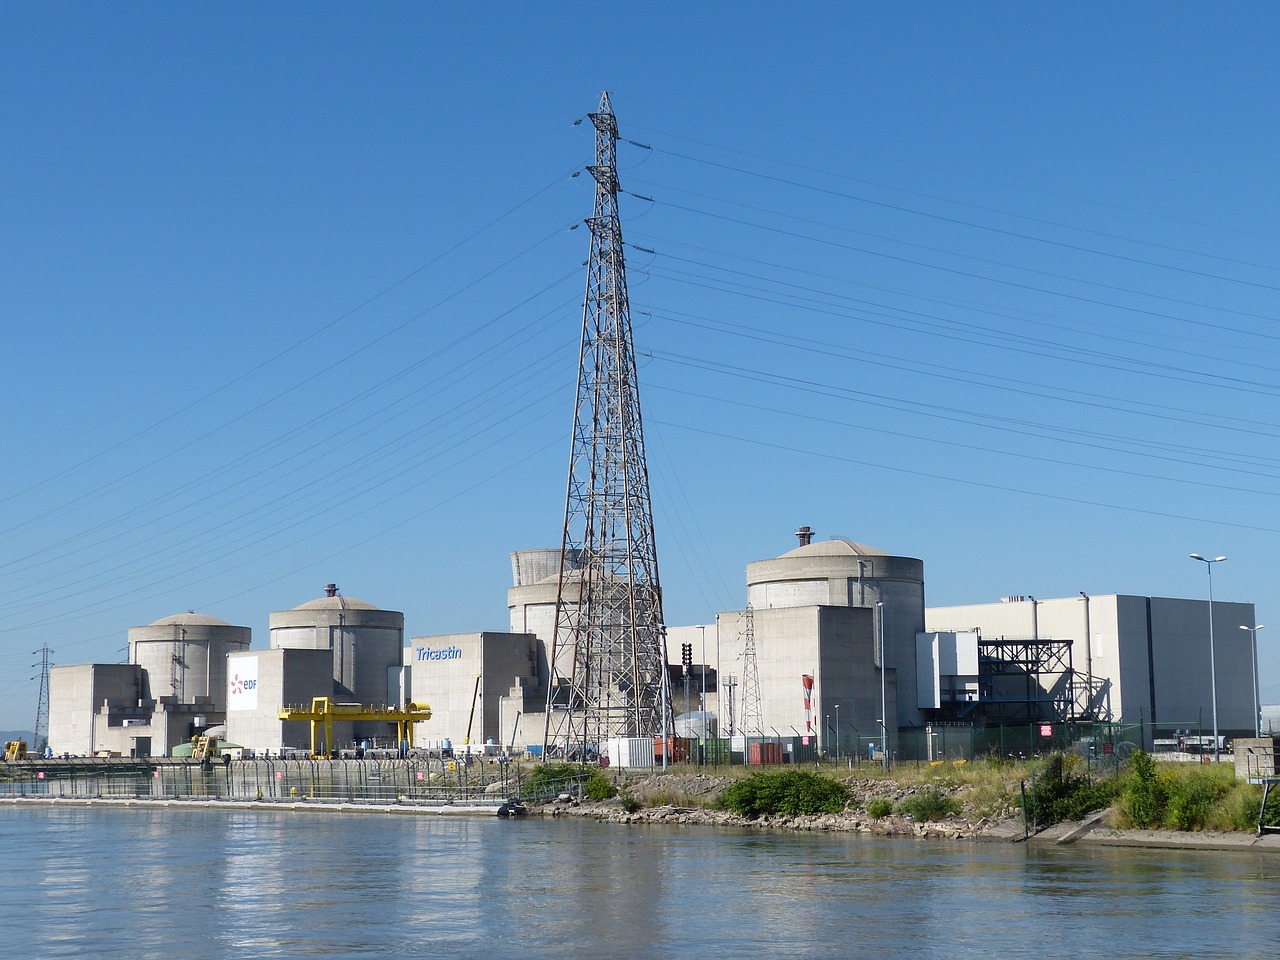 centrale nucléaire Tricastin (Pixabay – Falco)